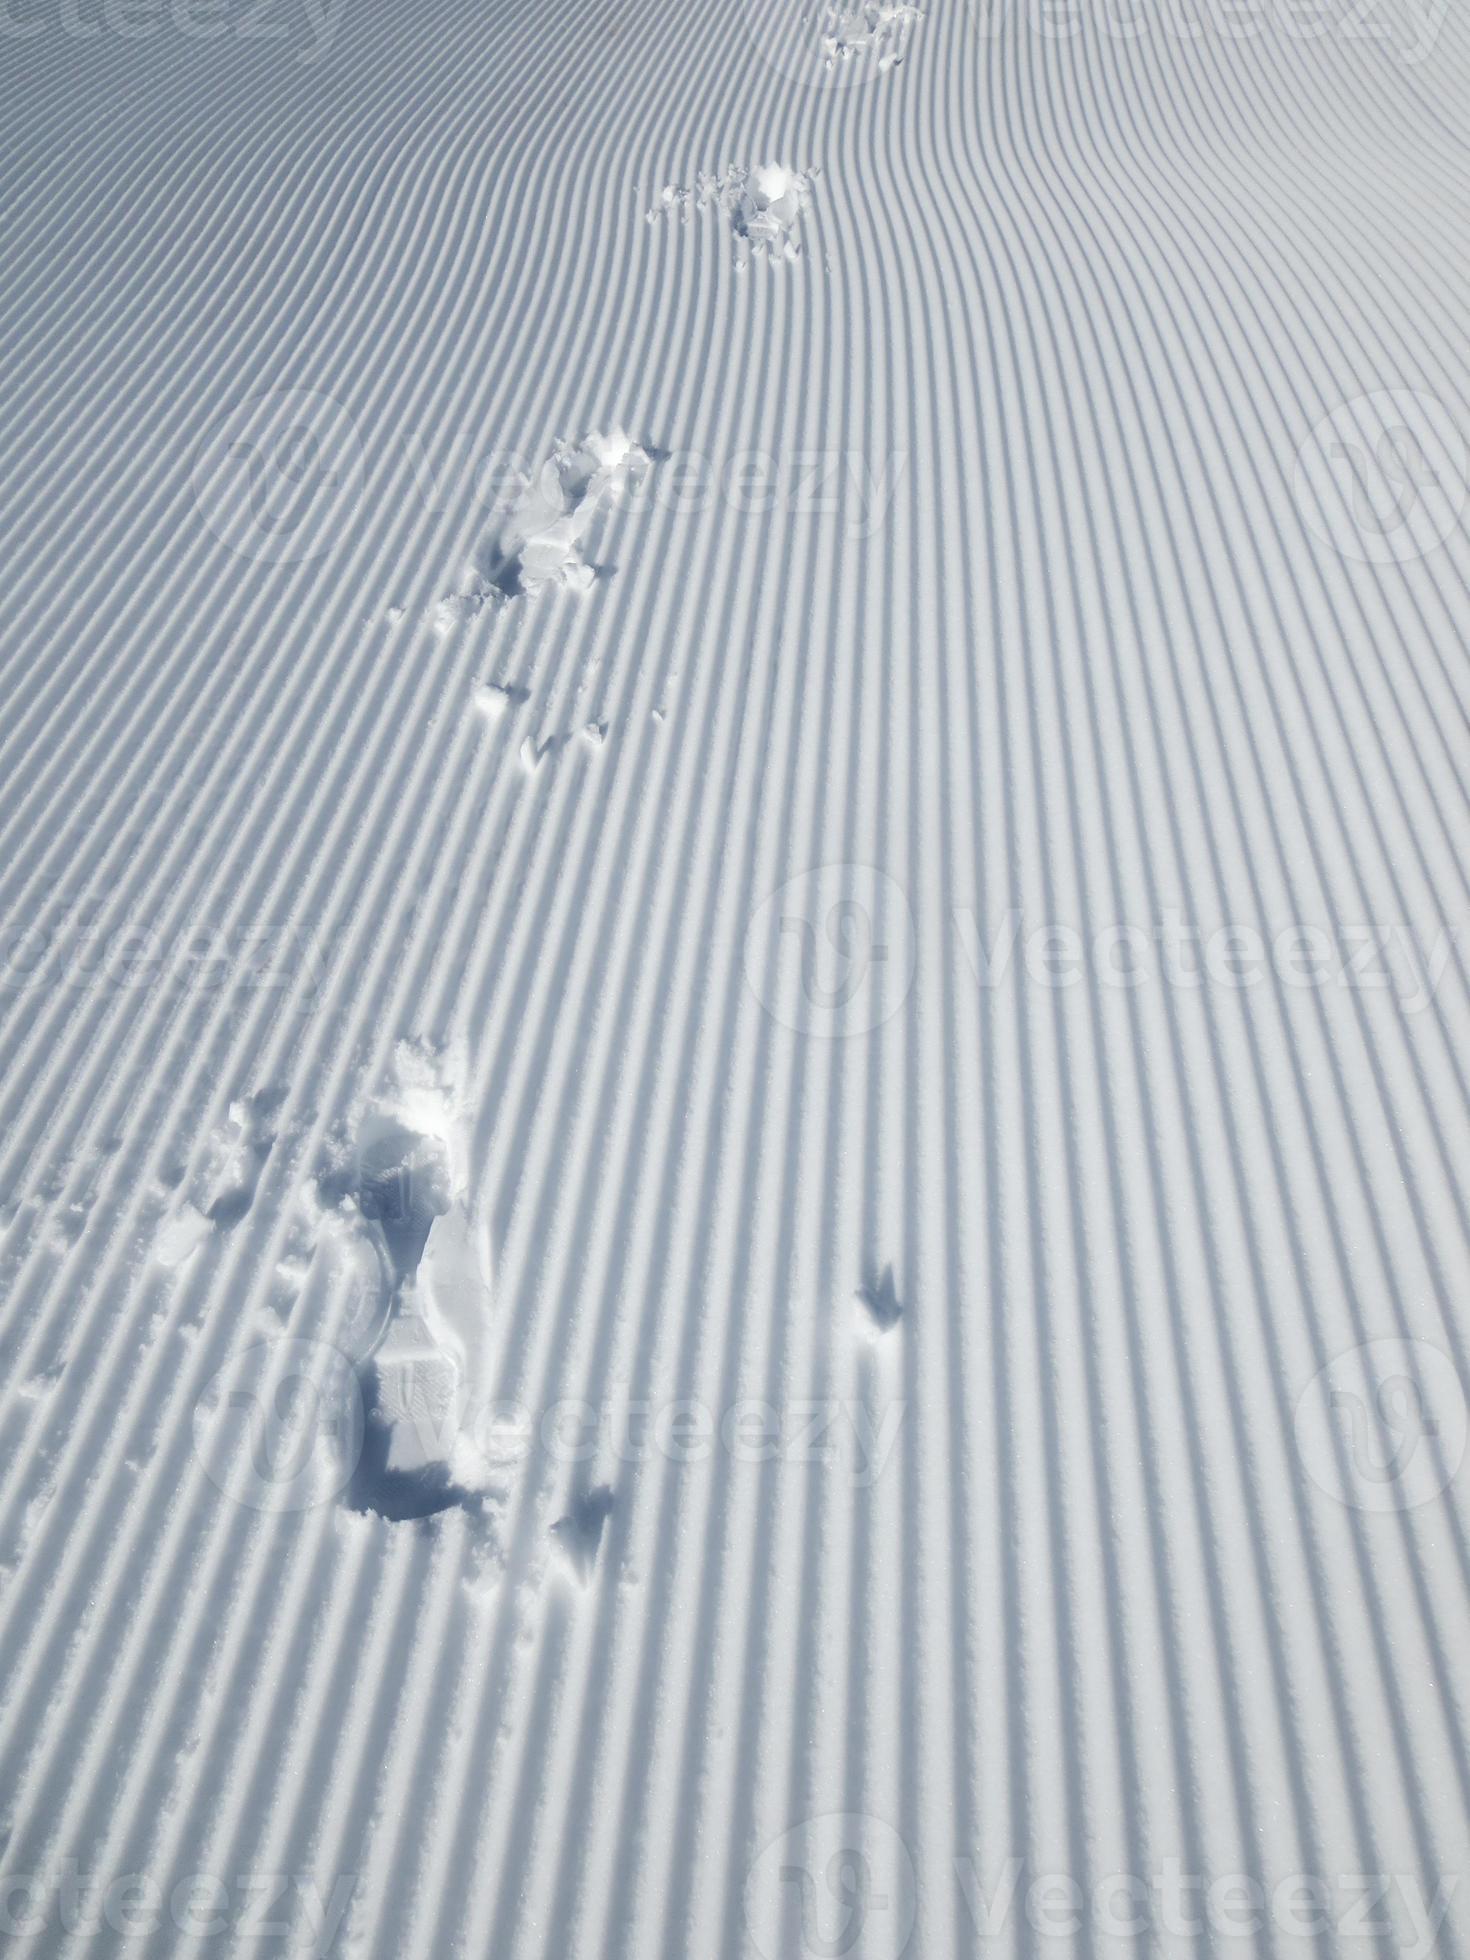 voetsporen in frisse skibaan foto